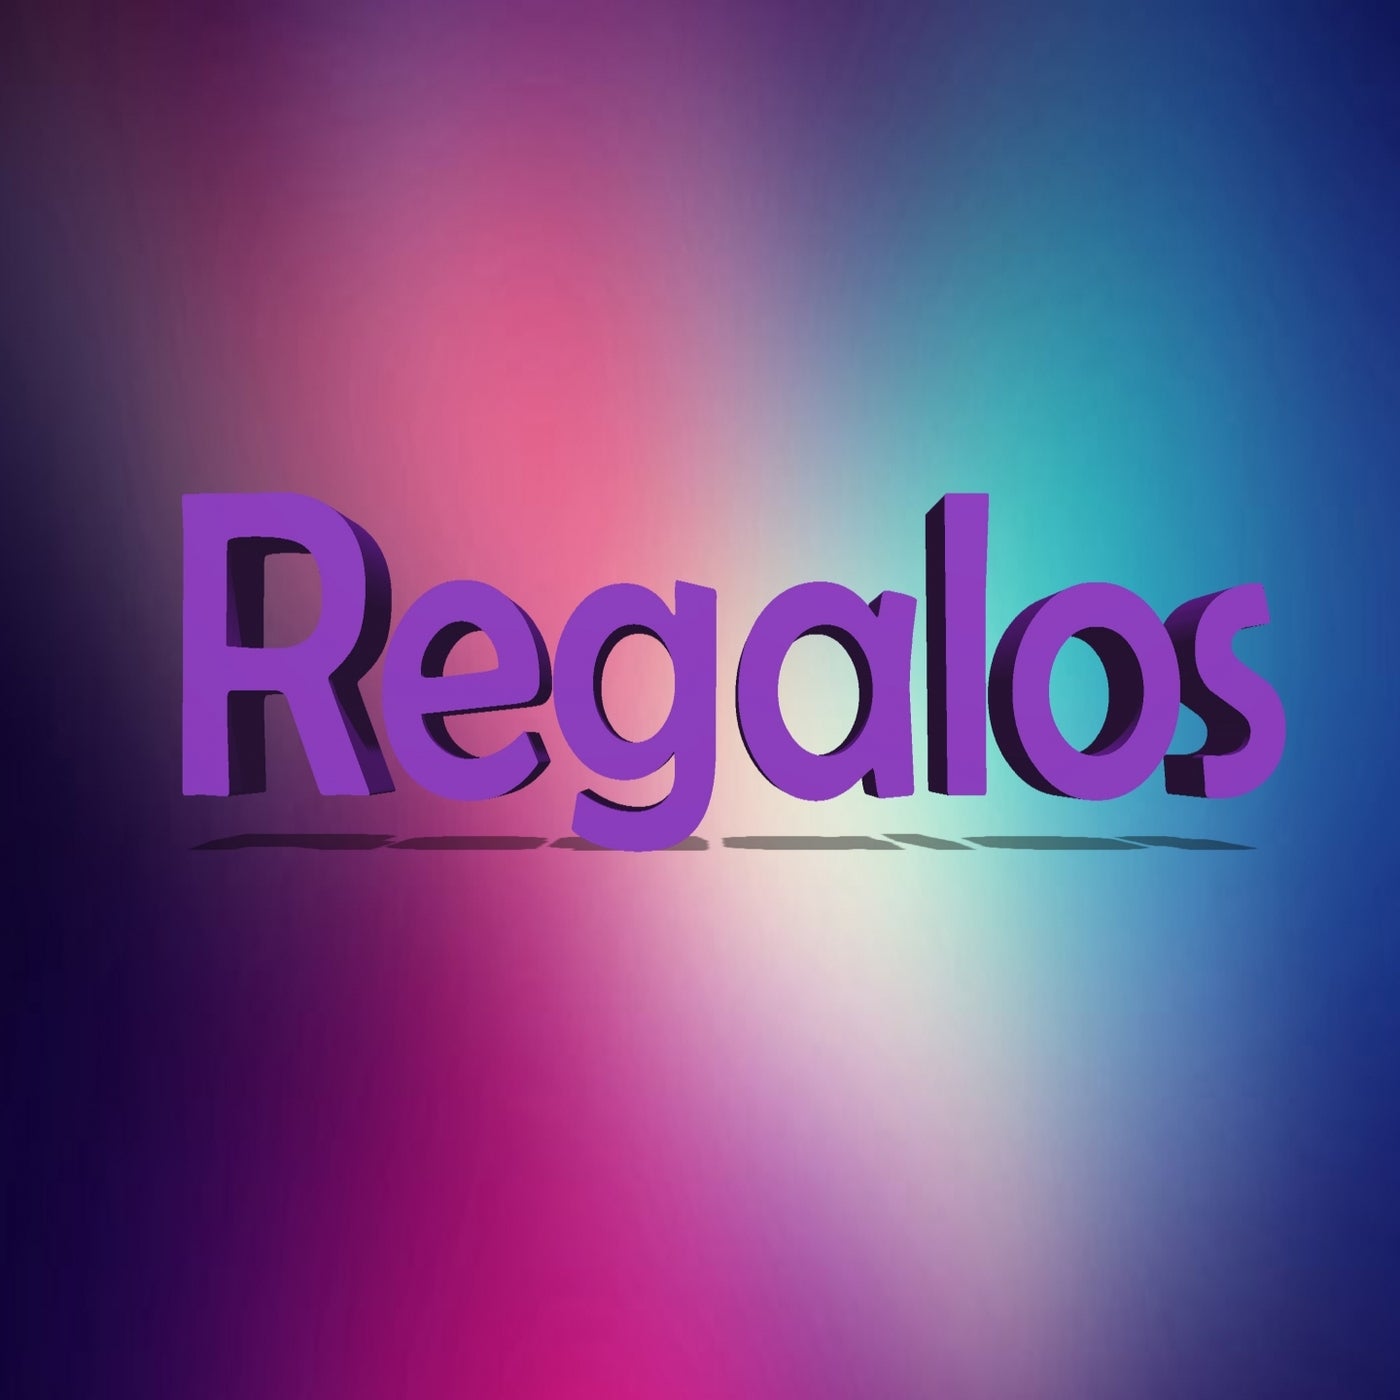 Regalos by KRONNO ZOMBER, BEEJO, BLOONDIE and Bubaseta on Beatsource